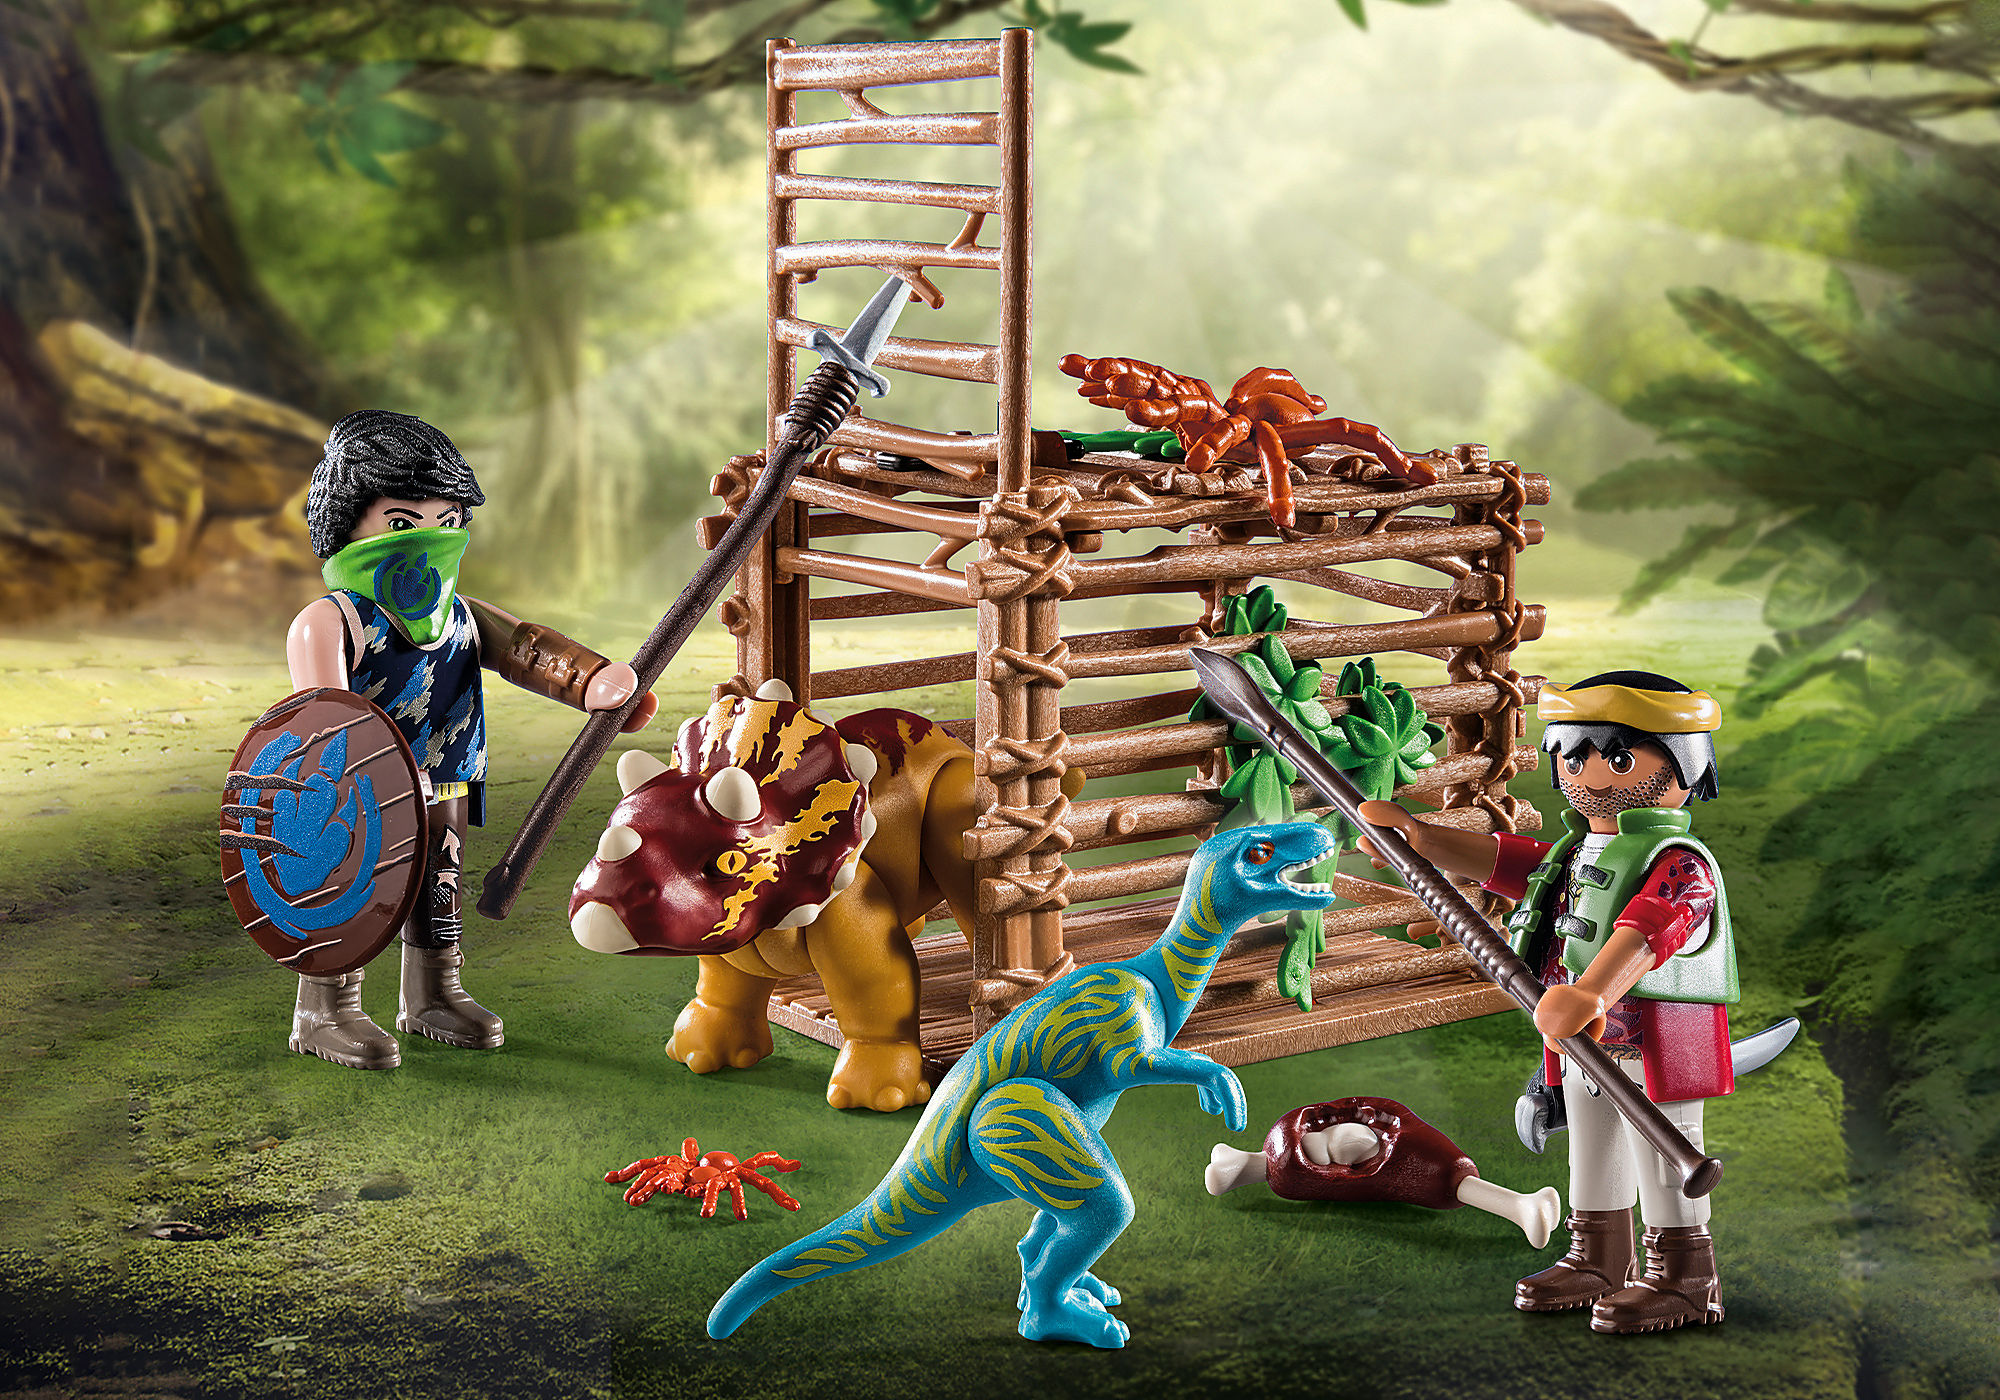 70926 - Playmobil Dino Rise - Gardien de la Mine de Lave Playmobil